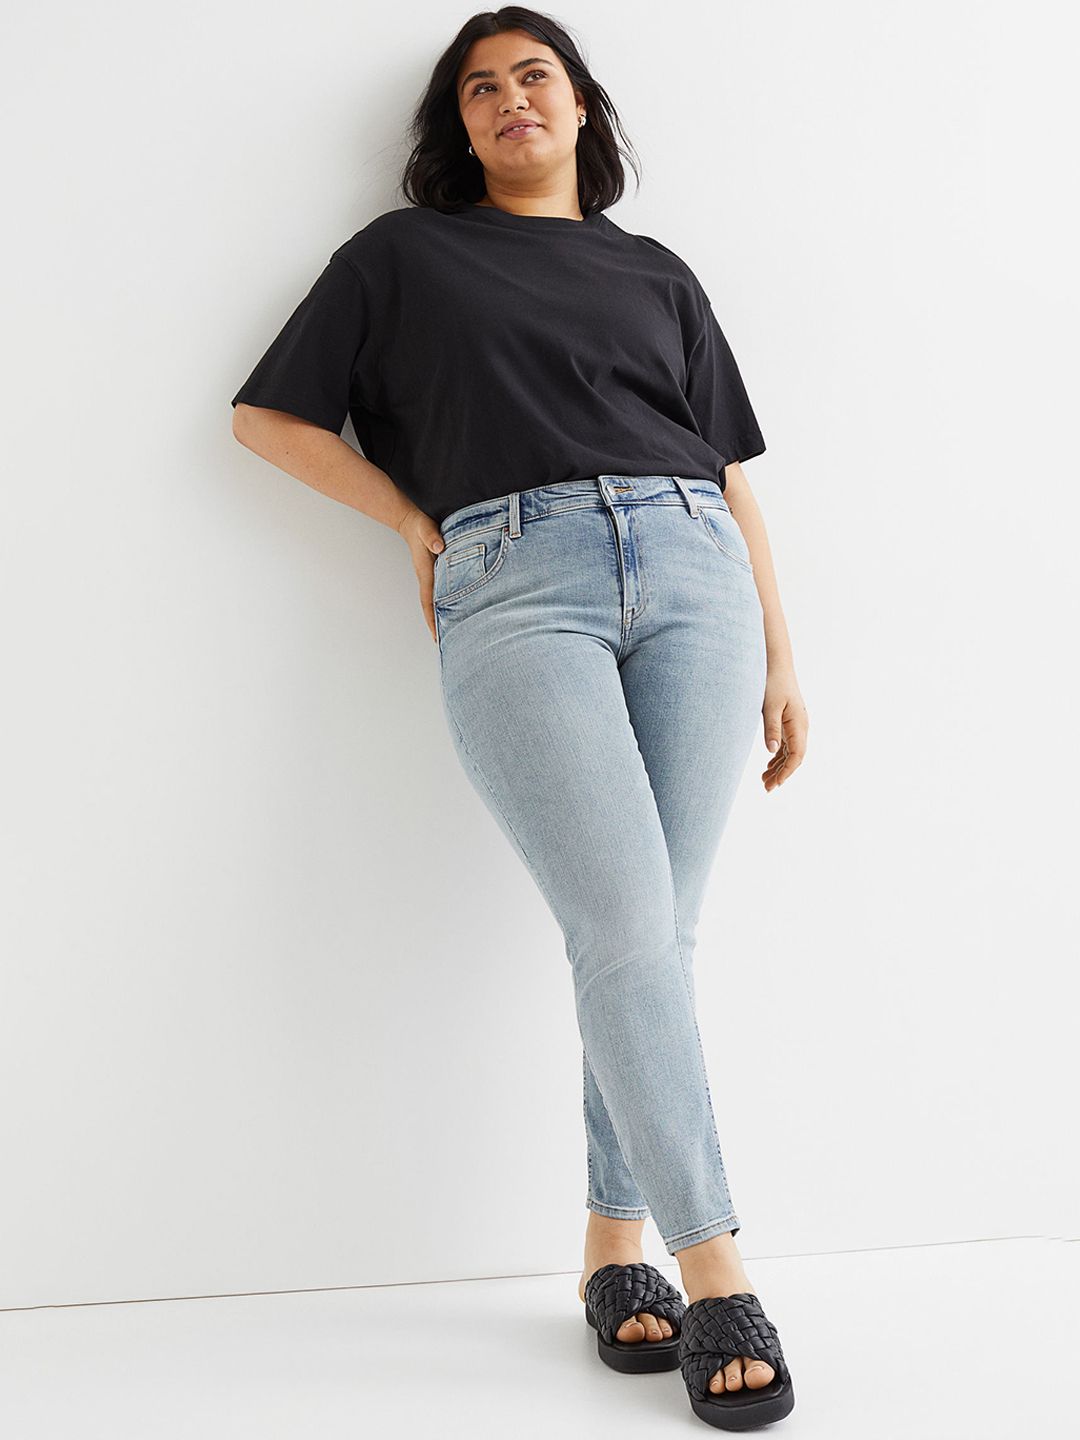 H&M Women Plus Size Blue Skinny Regular Jeans Price in India